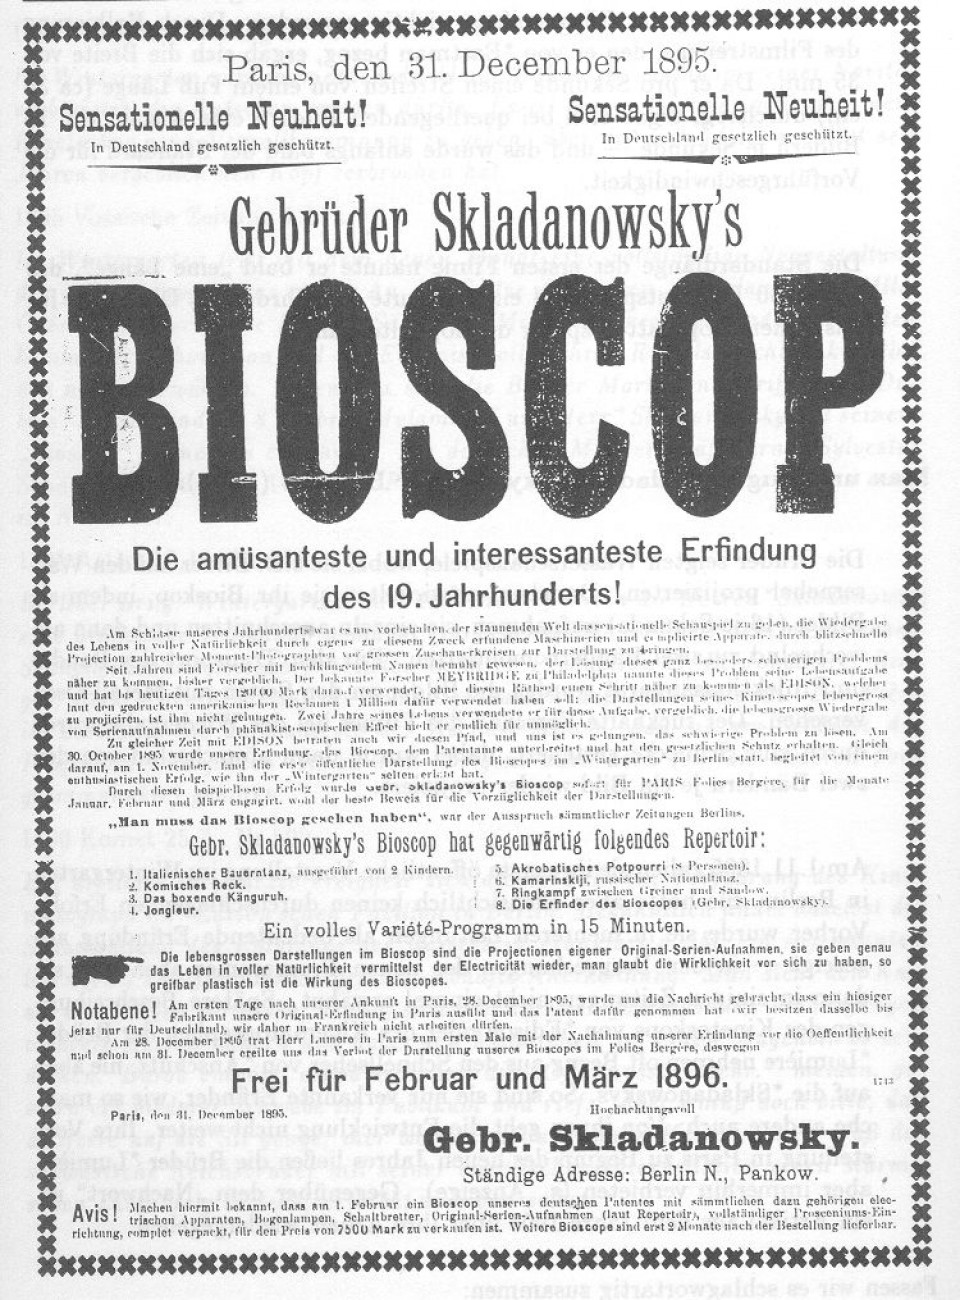 Bioscop Skladanowsky